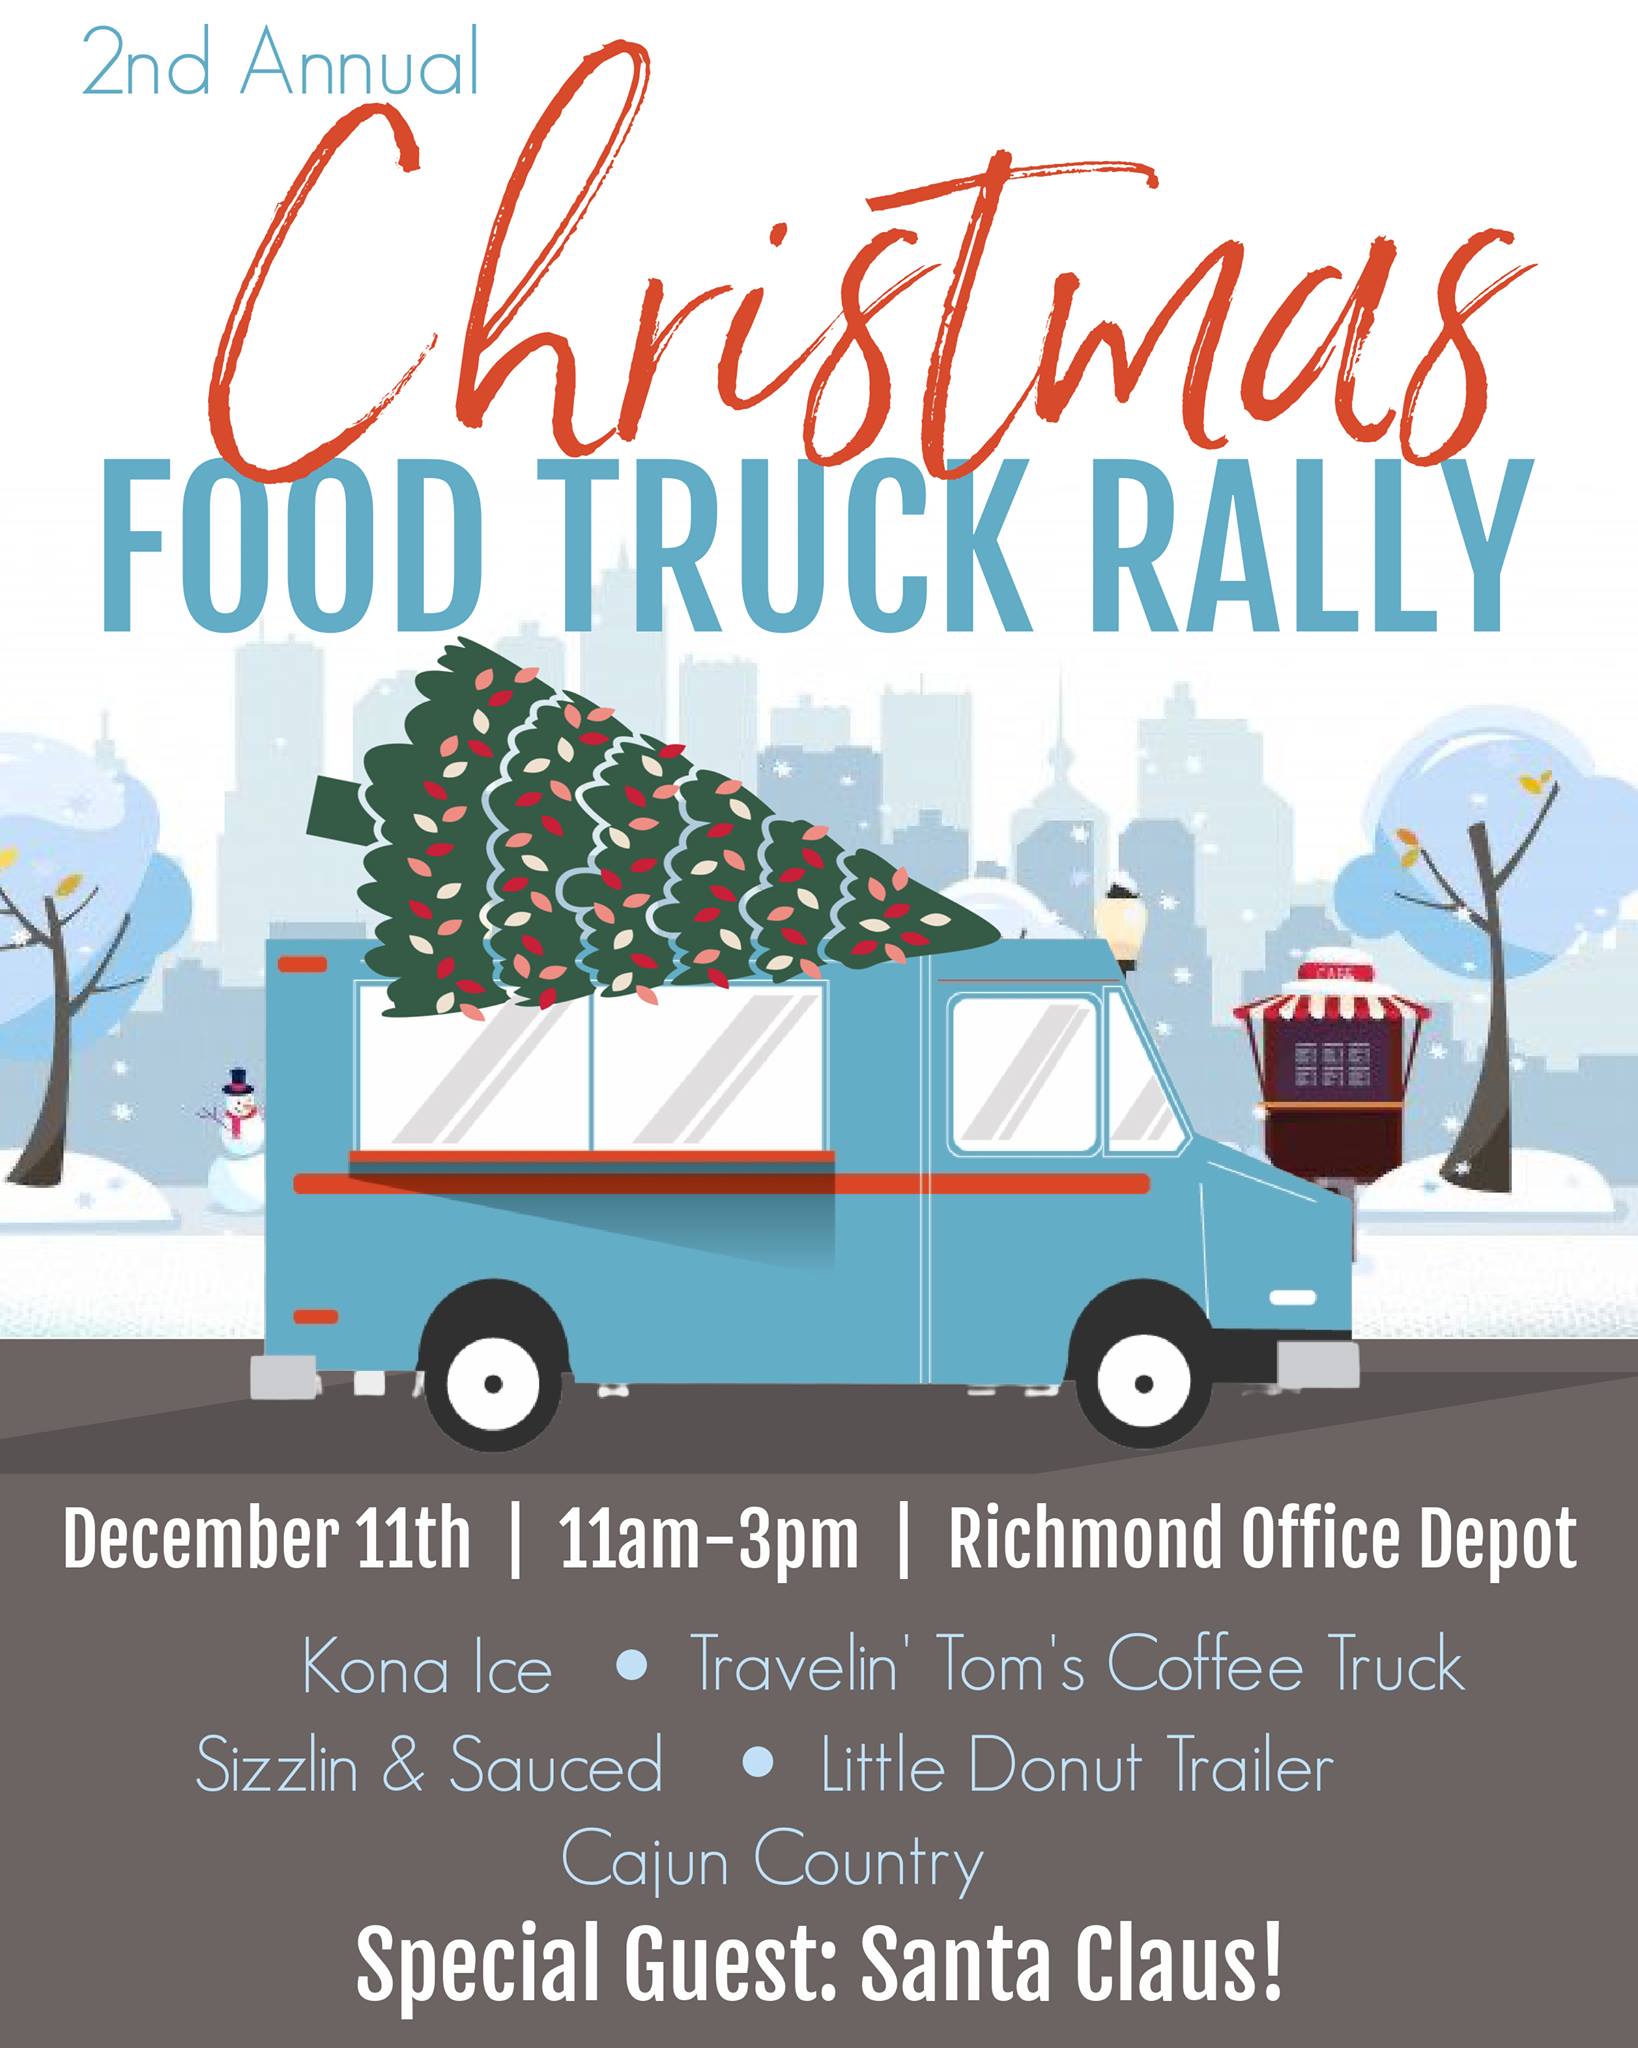 2nd Annual Christmas Food Truck Rally @ Richmond Office Depot | Richmond | Kentucky | United States